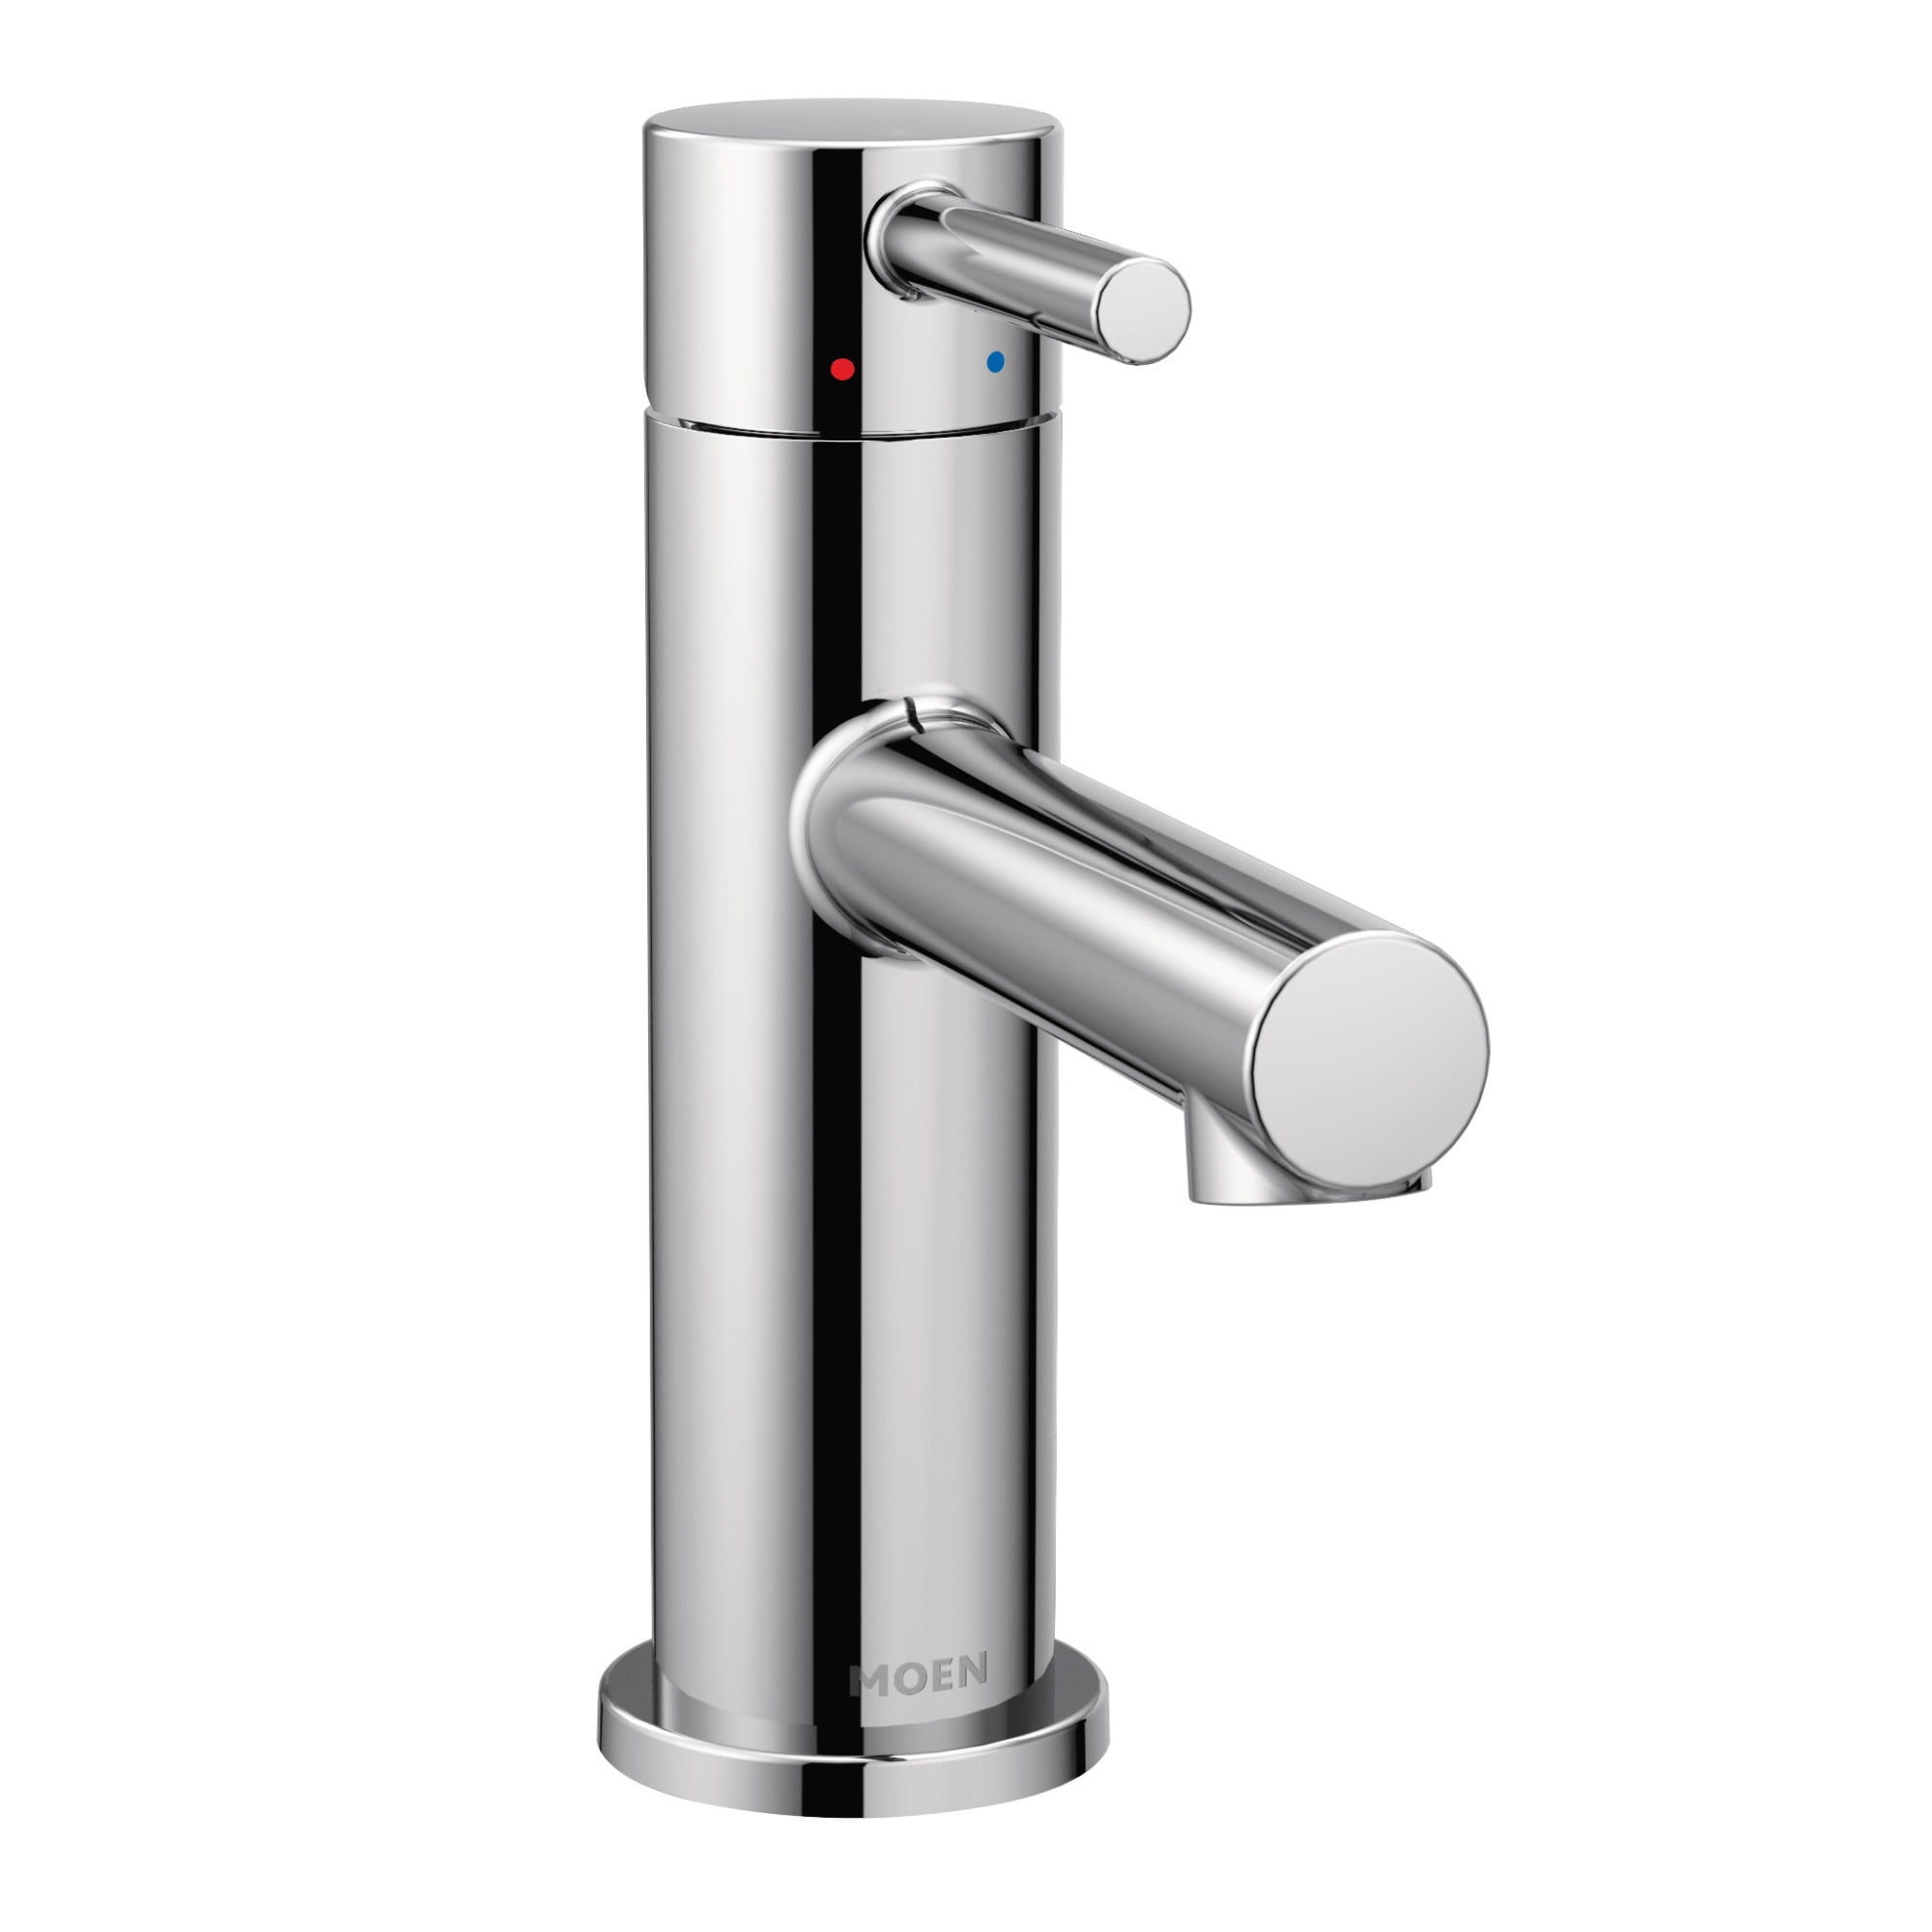 Moen 6190 Single Hole Bathroom Faucet for sale online 